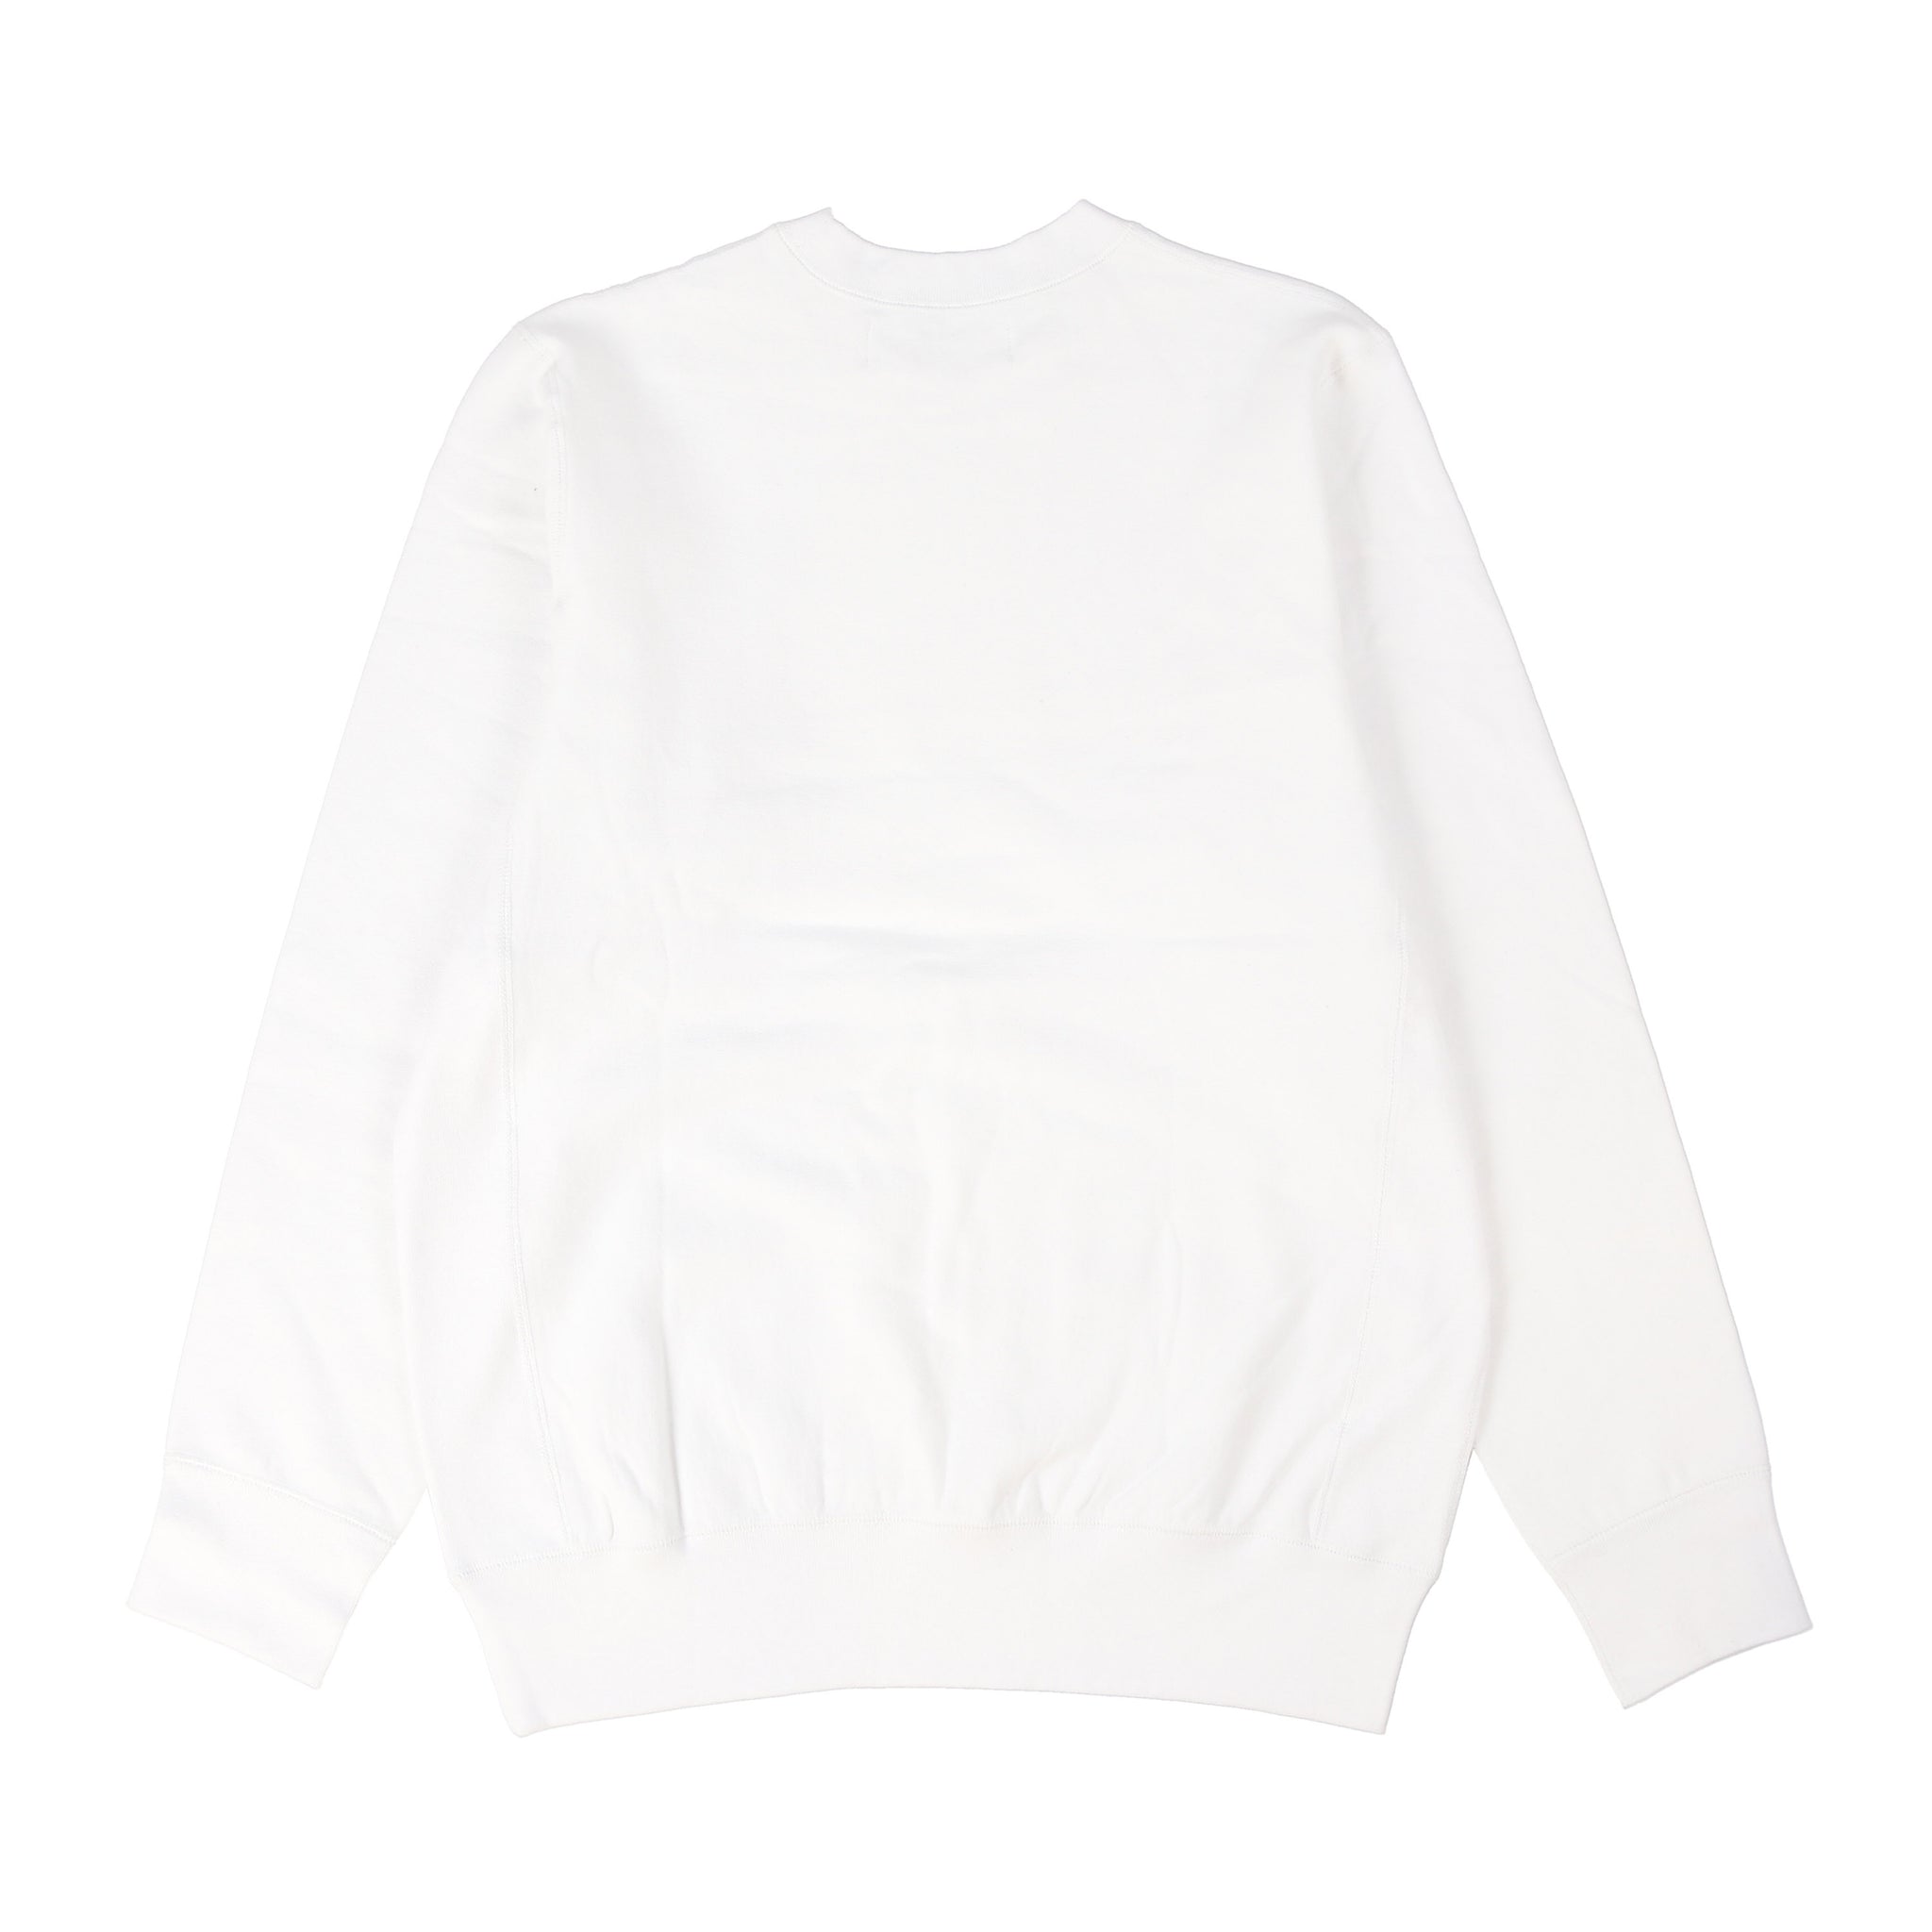 New 2015 Bianca Chandon Lover Crew Sweatshirt Size M